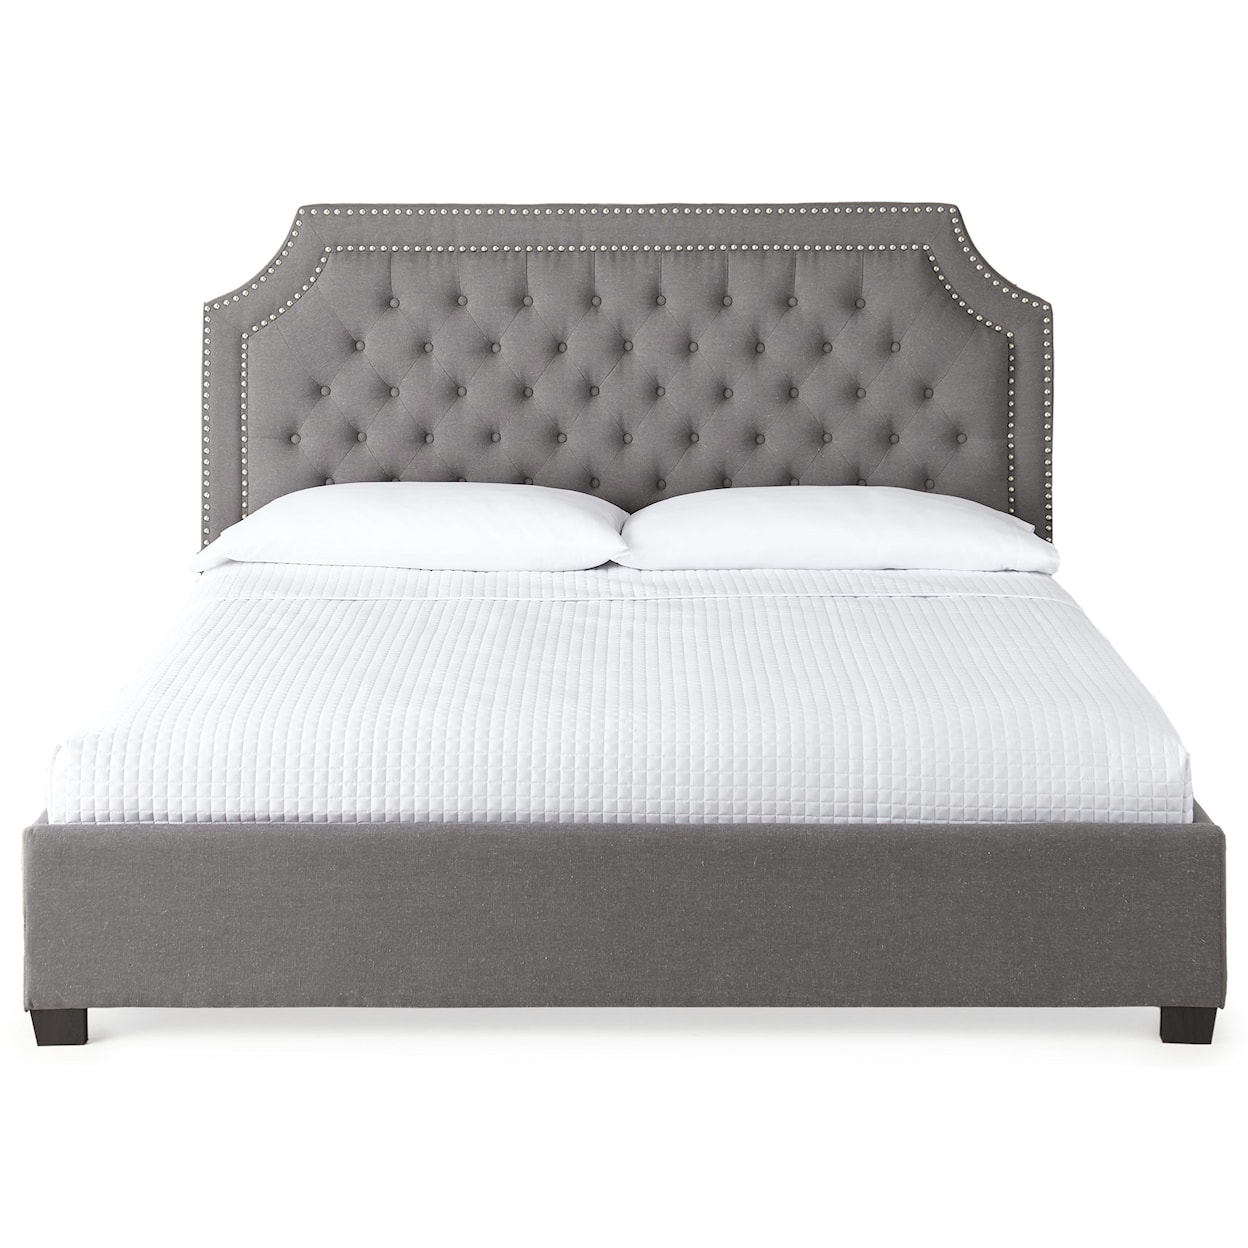 Steve Silver Wilshire Queen Upholstered Bed